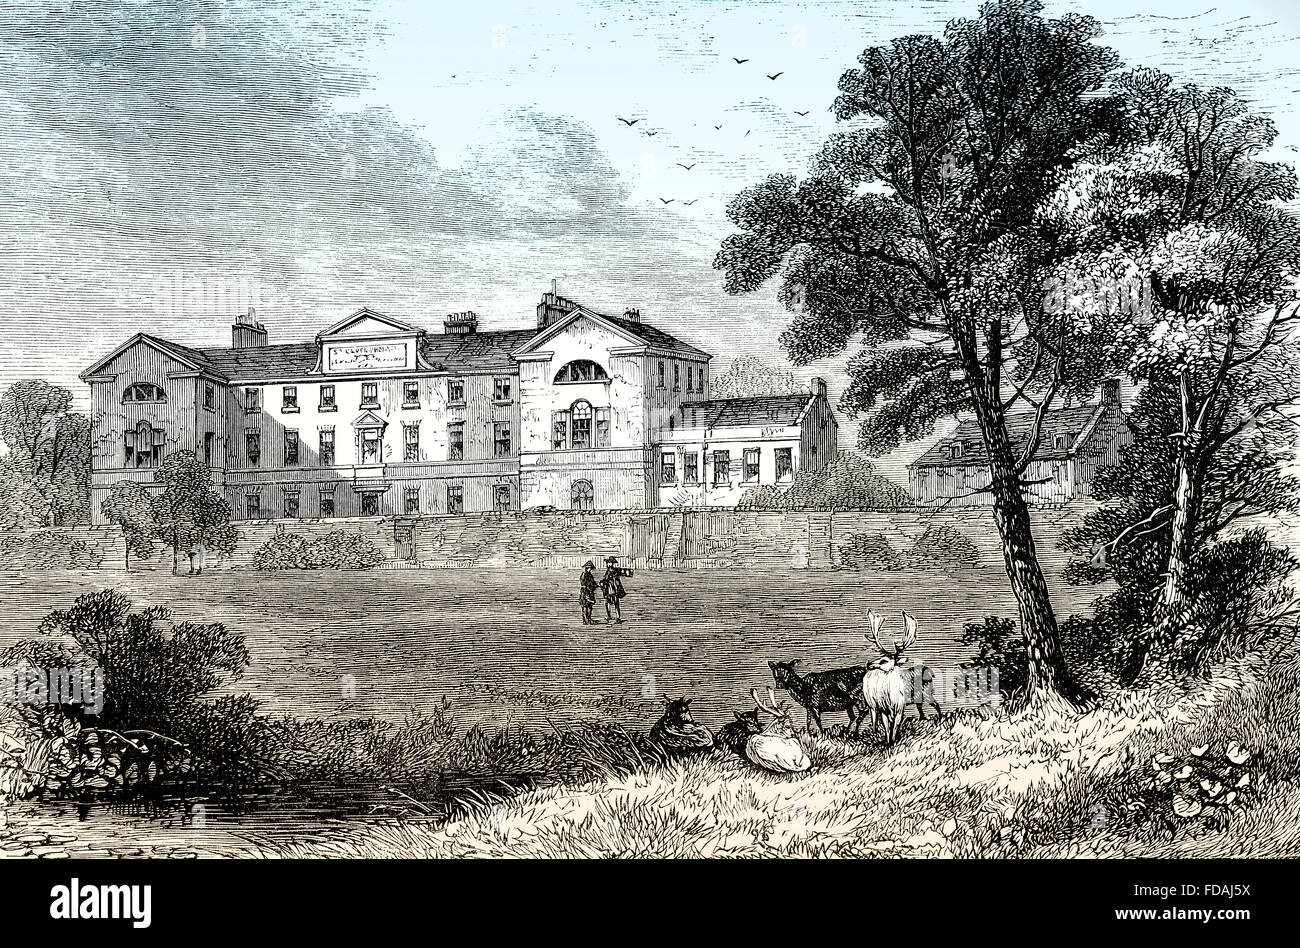 St George's Hospital, 1745, Londres, Angleterre Banque D'Images